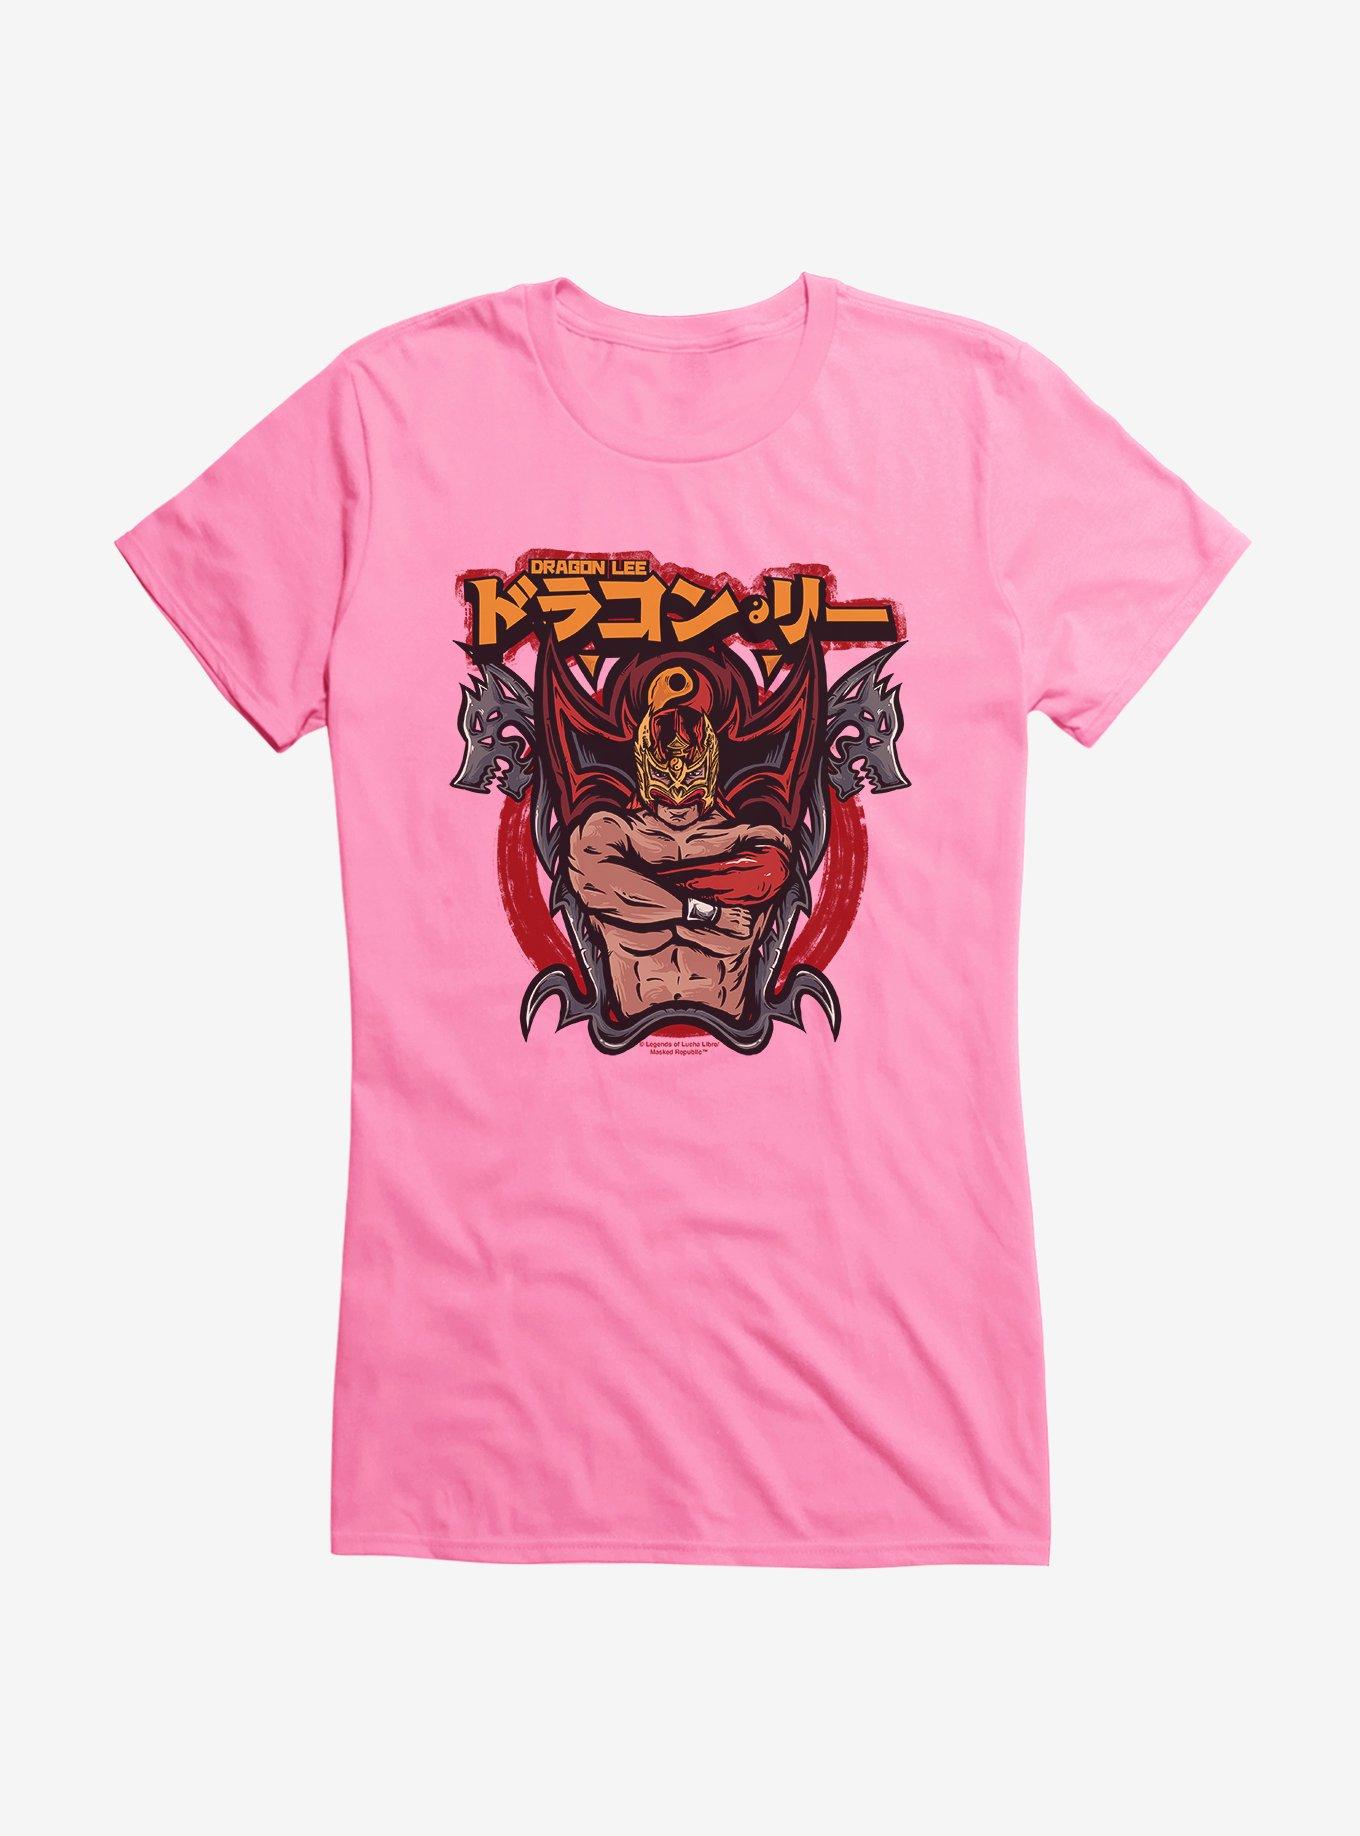 Masked Republic Legends Of Lucha Libre Dragon Lee Crest Girls T-Shirt, CHARITY PINK, hi-res